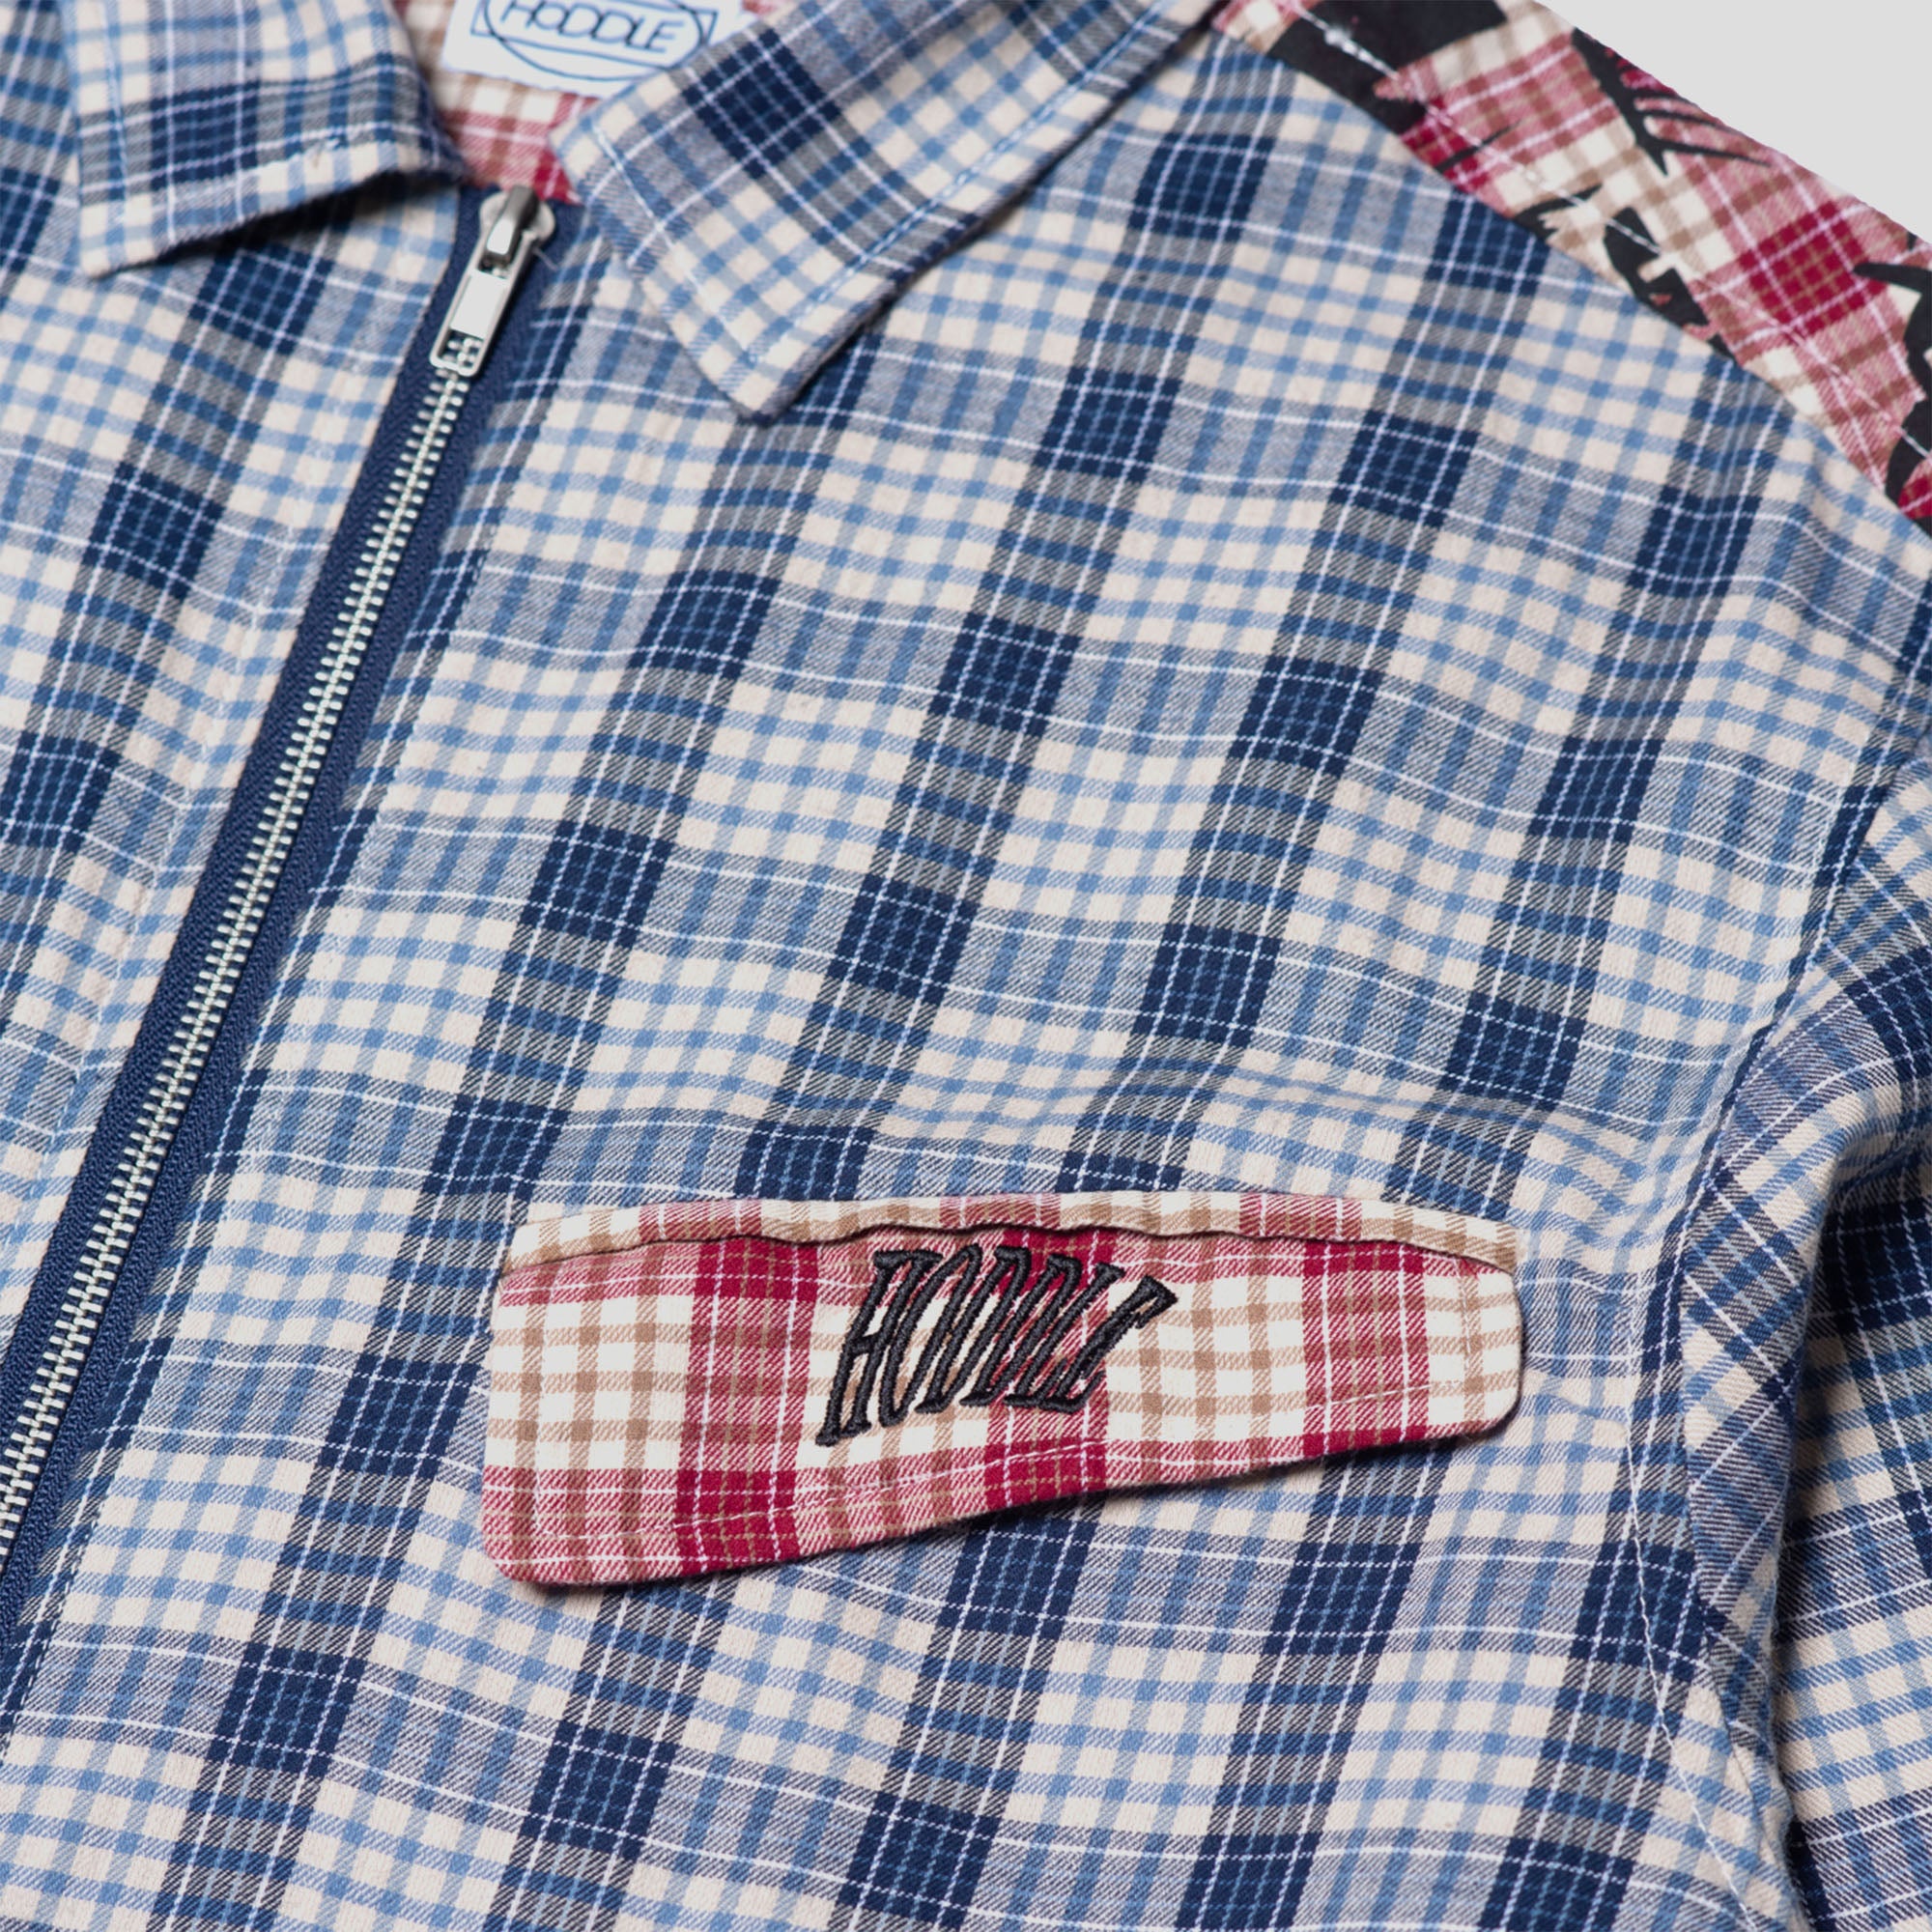 Hoddle Skyline Zip Up Flannel Shirt - Navy Plaid / Red Plaid